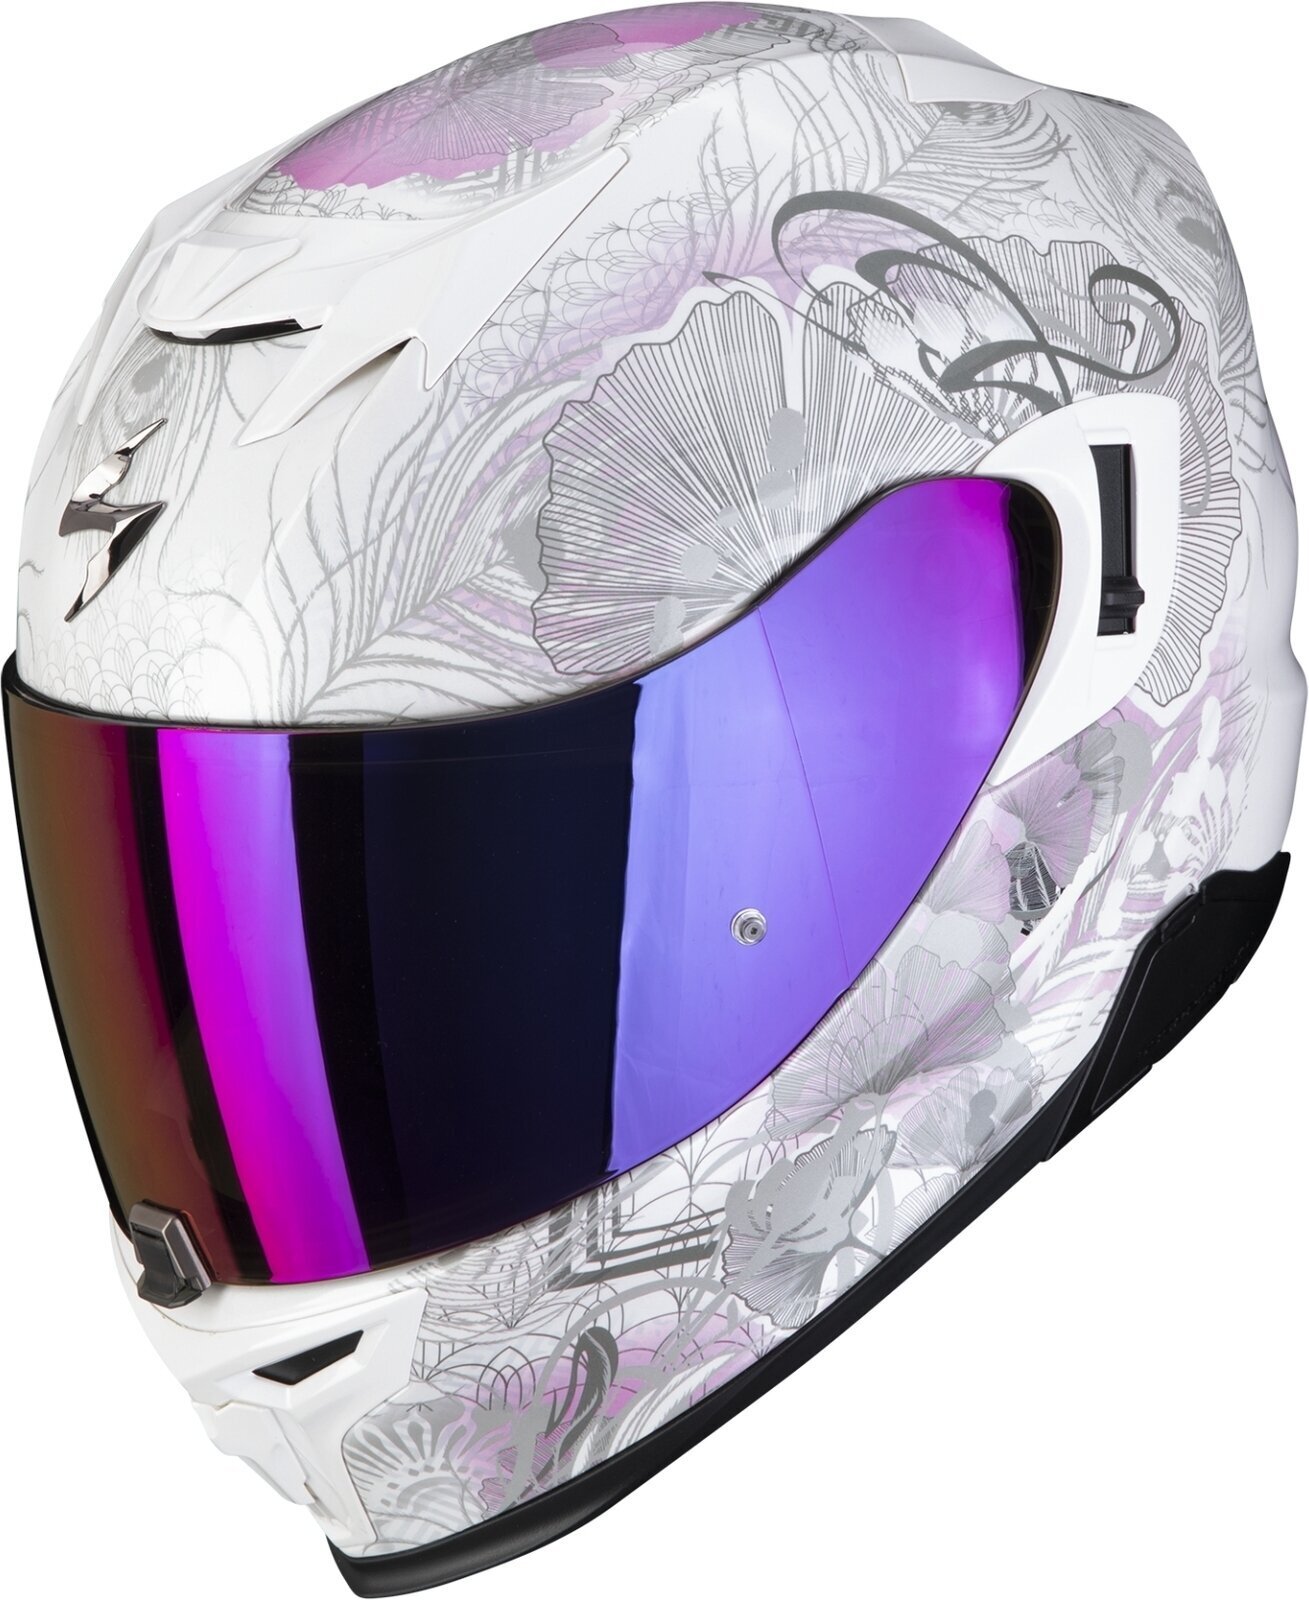 Helm Scorpion EXO 520 EVO AIR MELROSE Pearl White/Pink S Helm